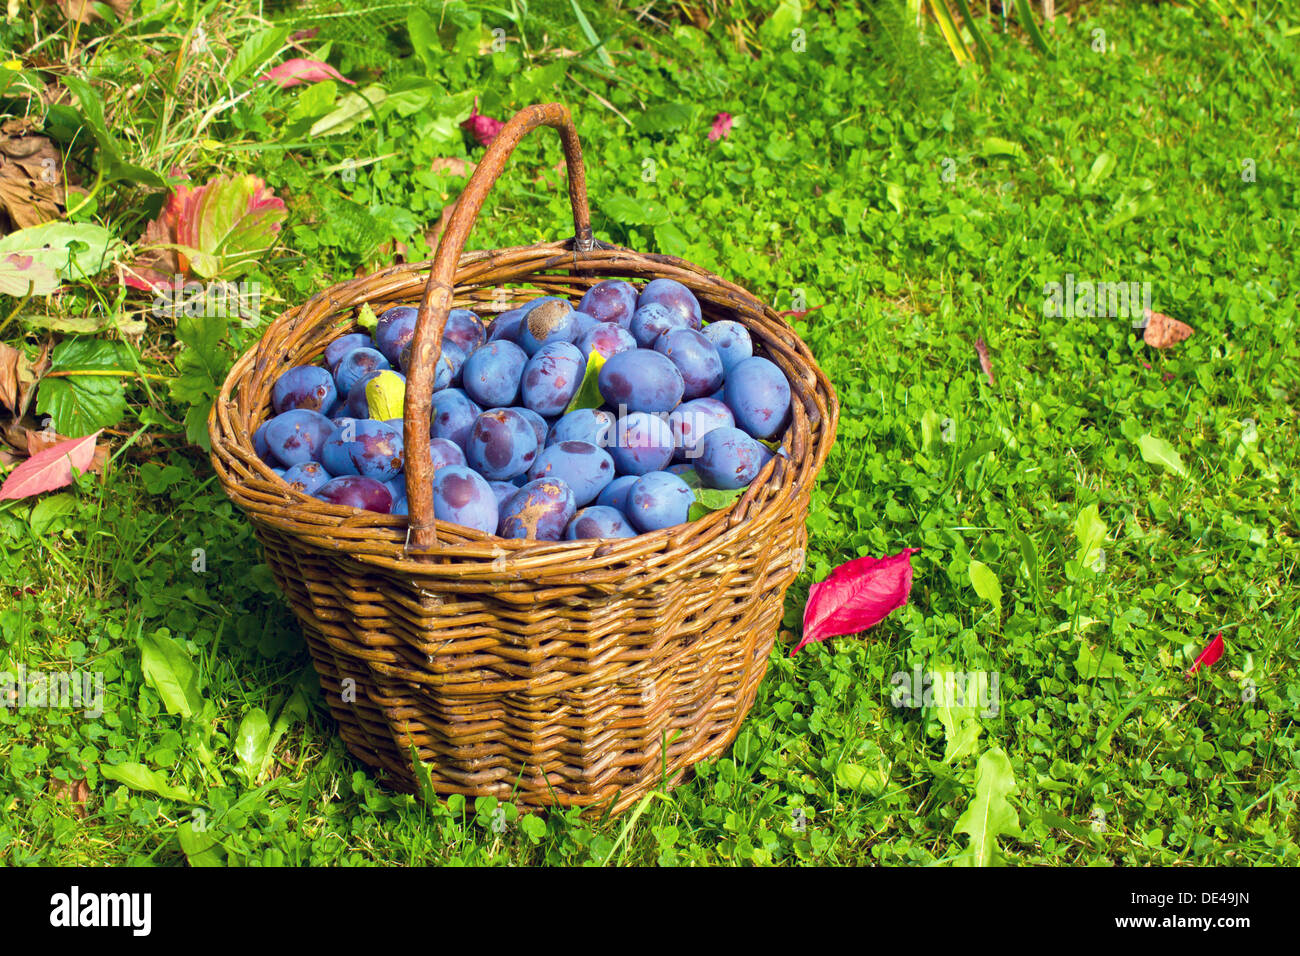 plums in a wicker basket Stock Photo